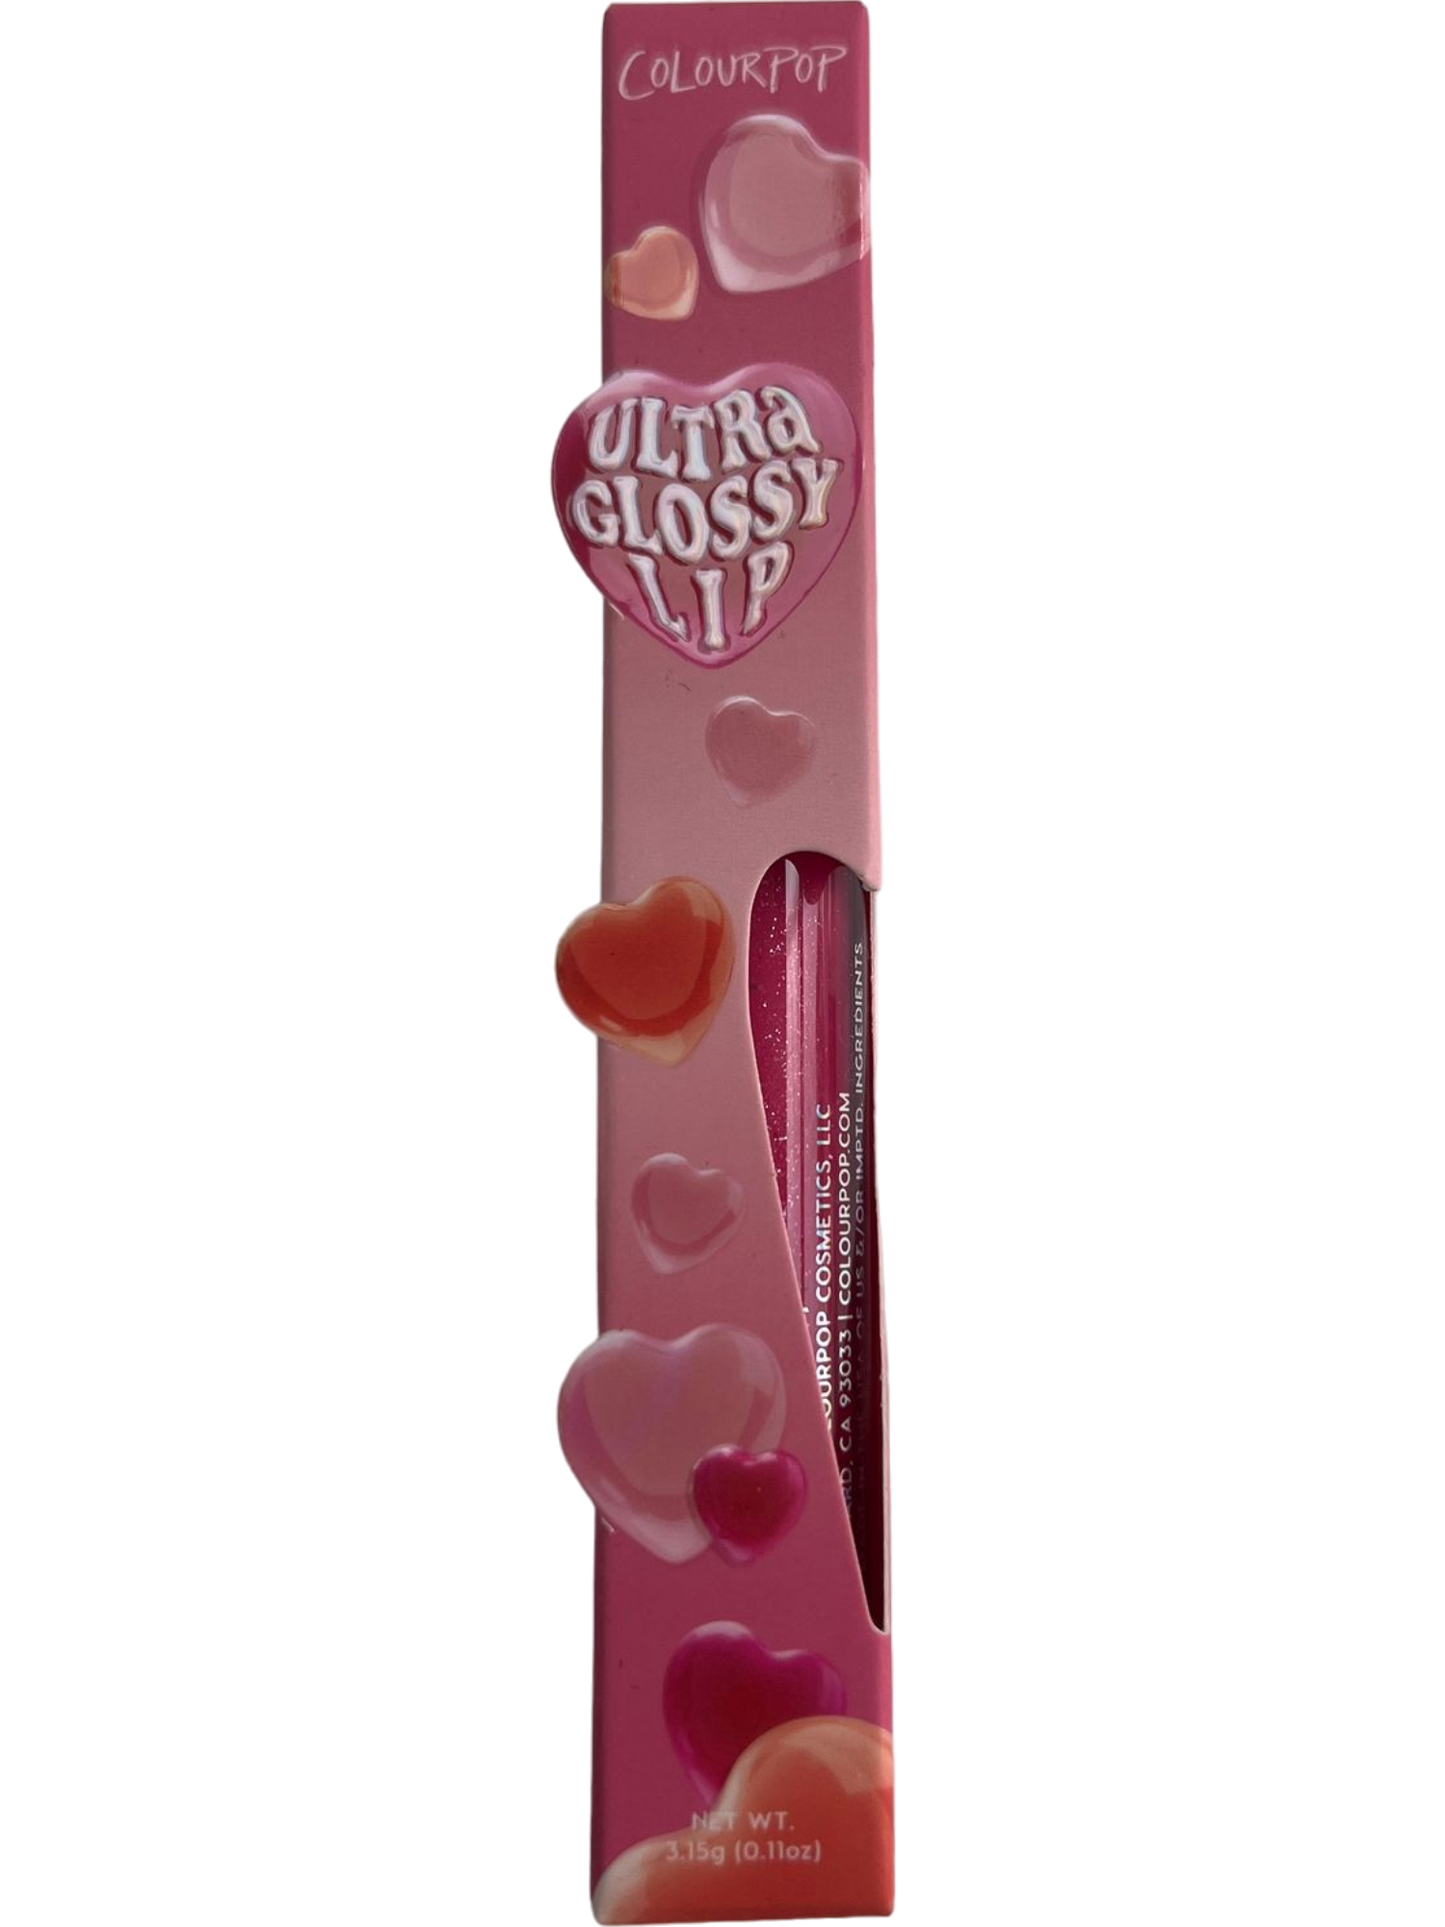 ColourPop Pink Ultra Glossy Lip Beauty Product